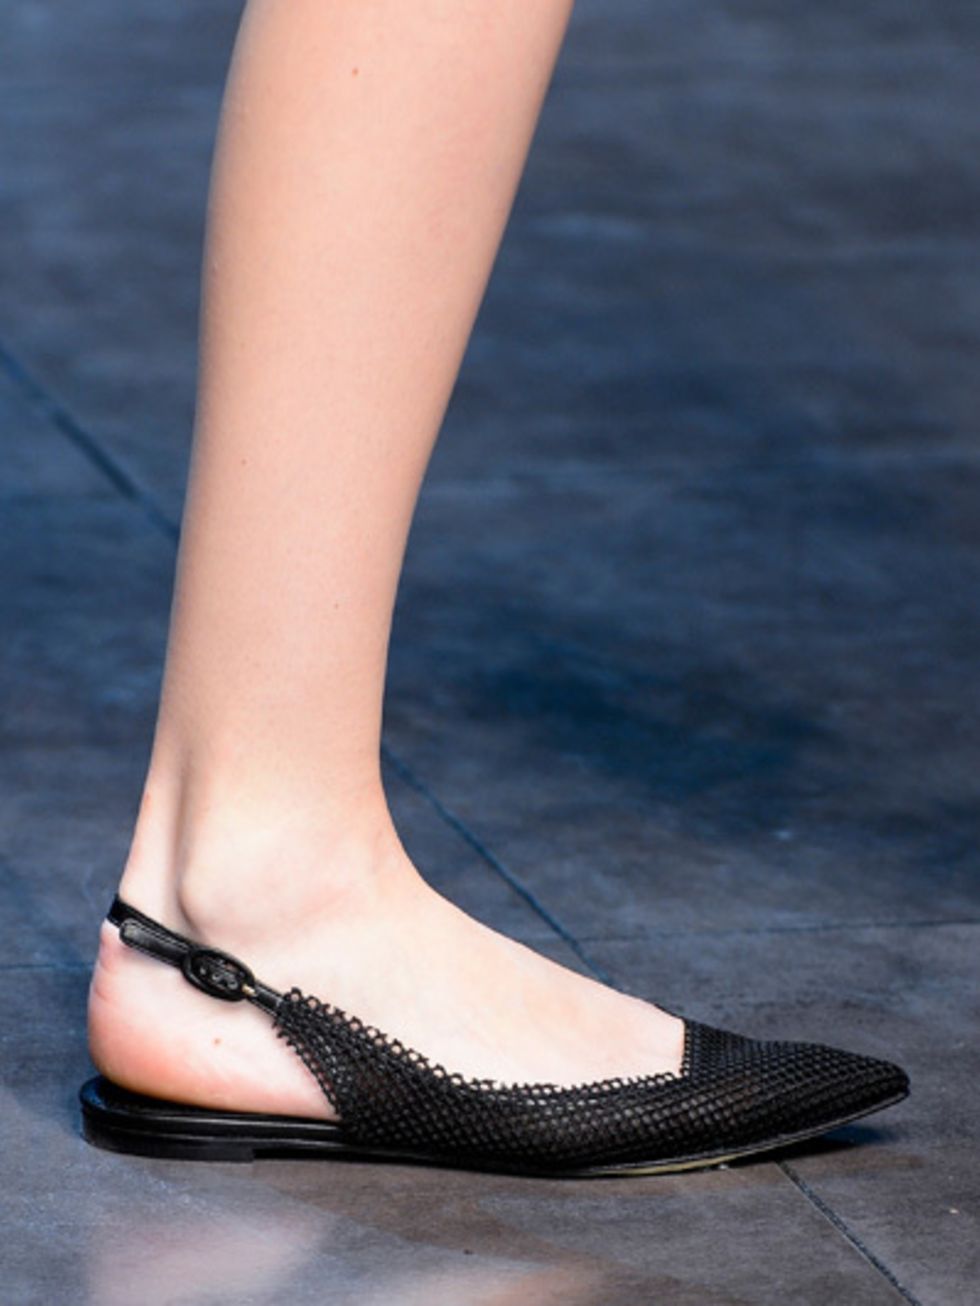 Human leg, Joint, Toe, Sandal, High heels, Foot, Fashion, Black, Grey, Tan, 